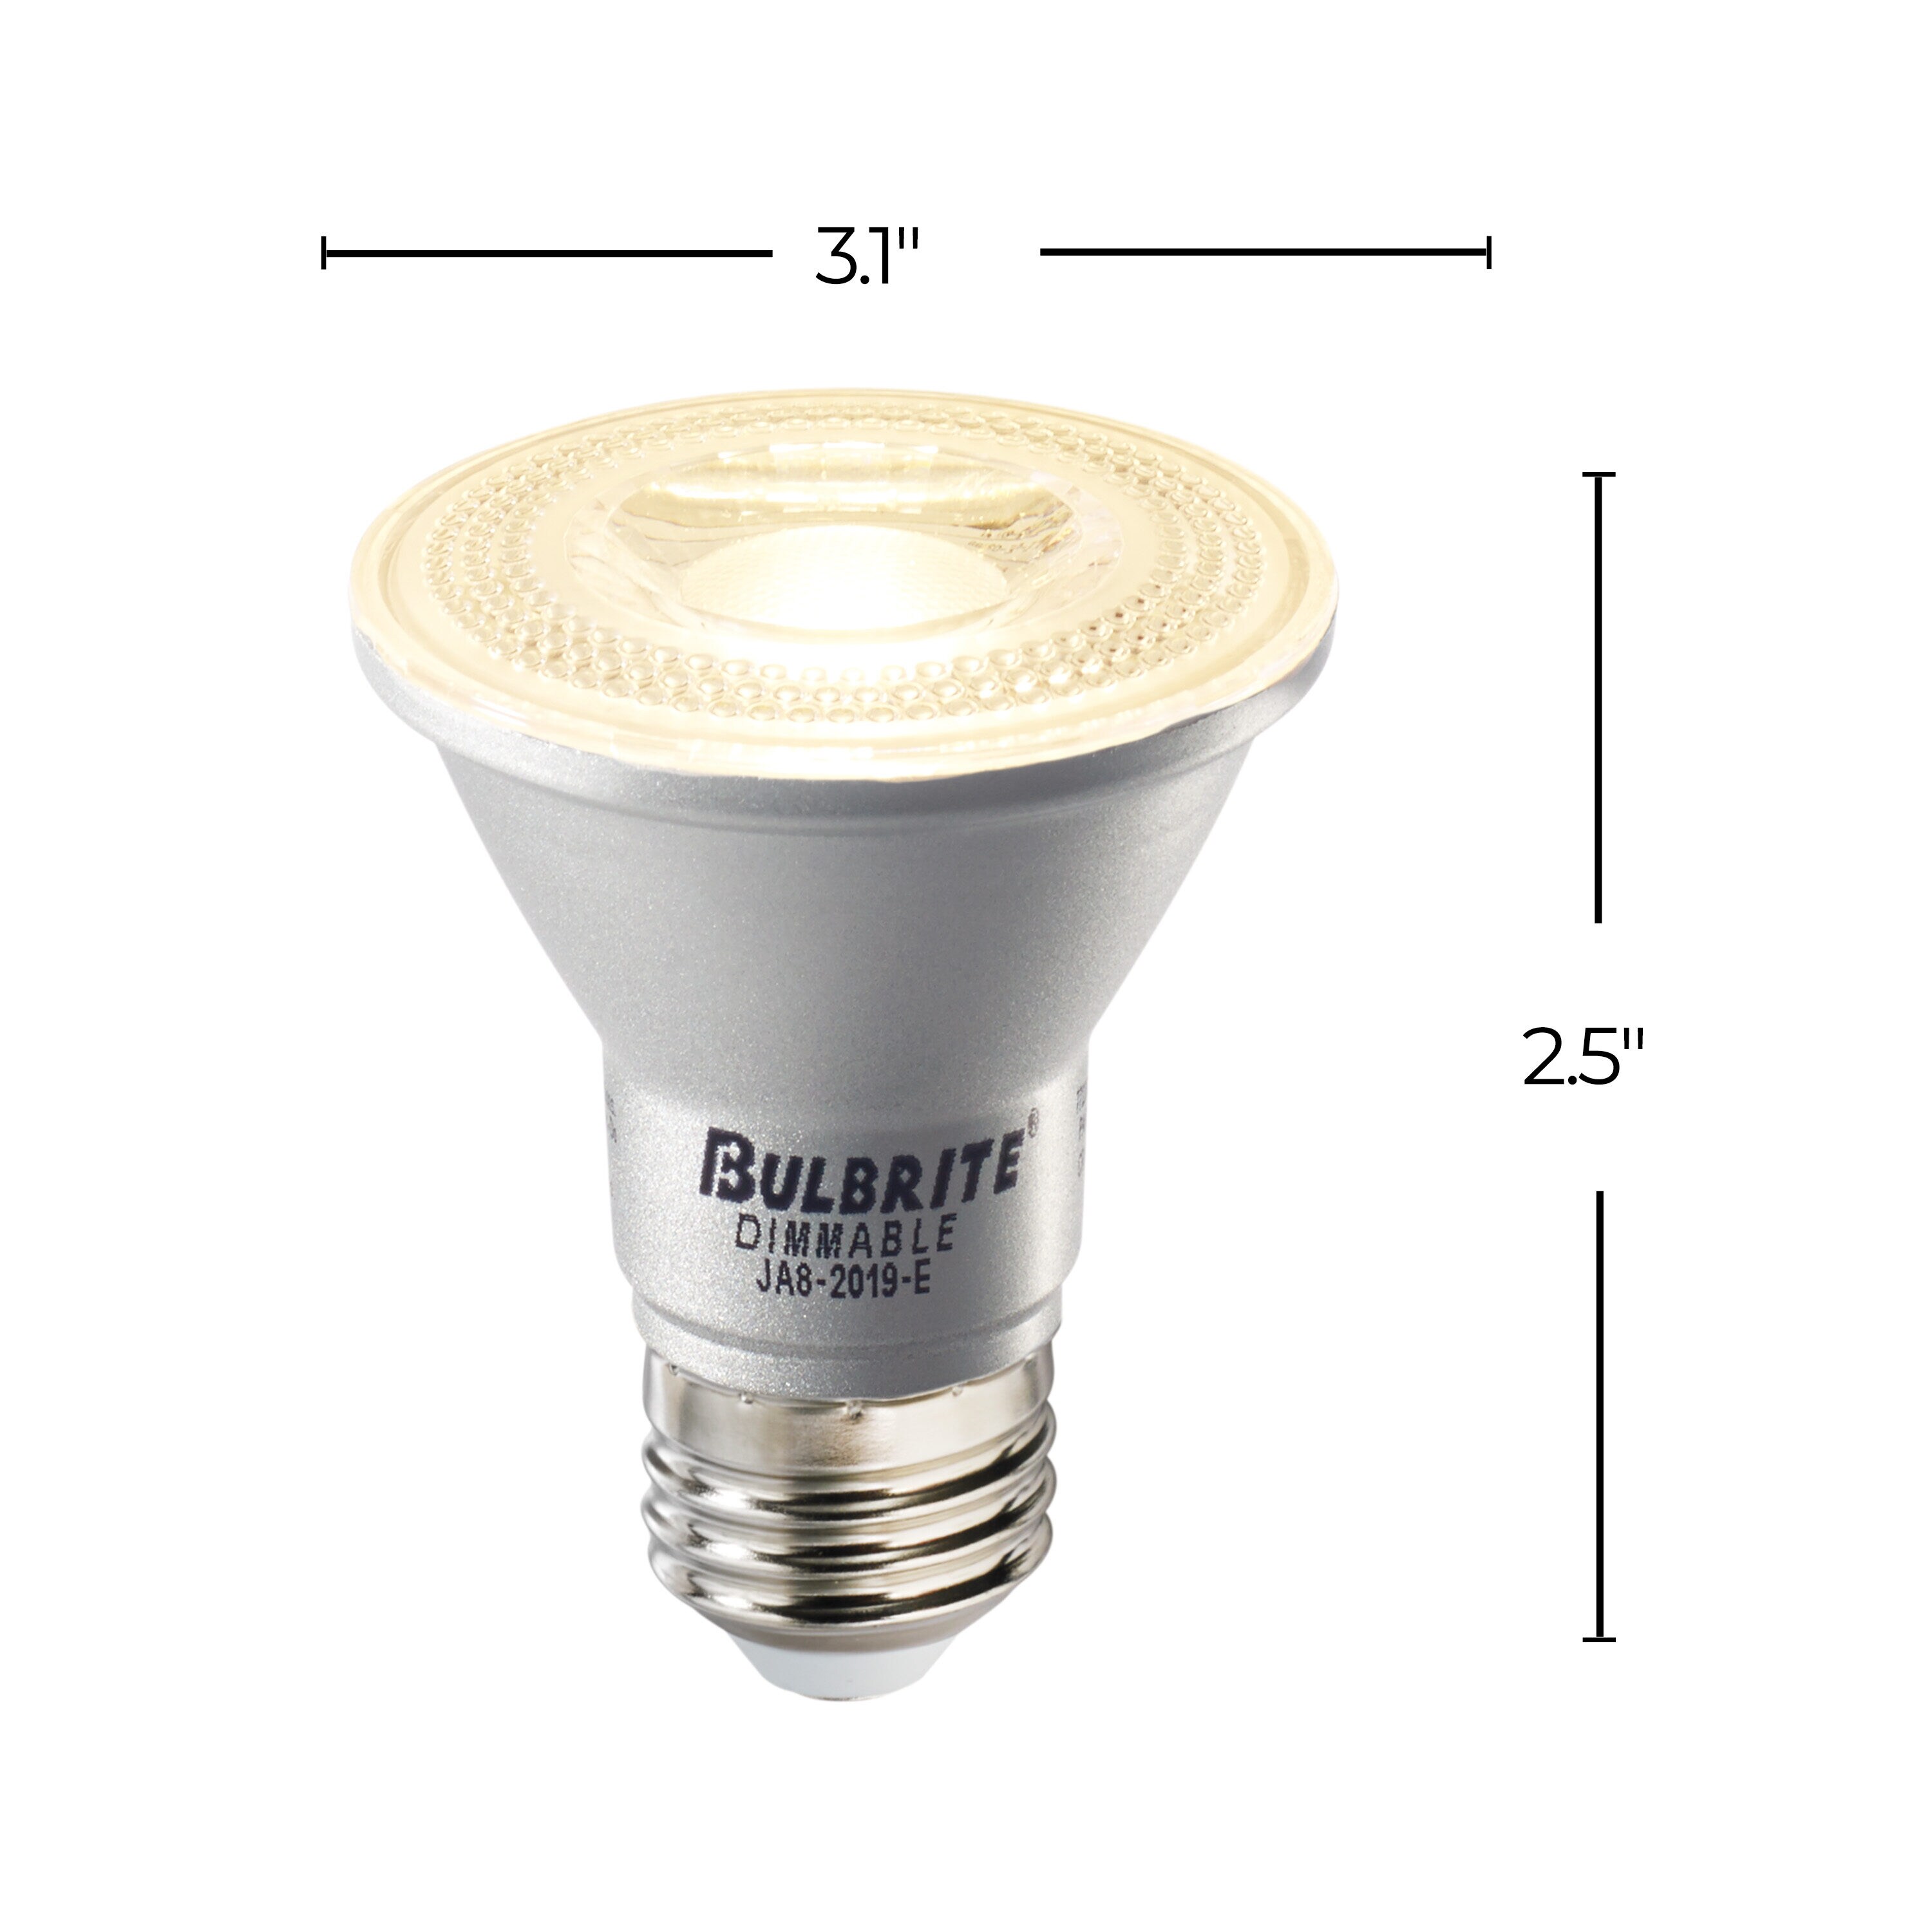 Bulbrite Dimmable 6.5W 3000K 40° MR16 LED Bulb, GU10 Base